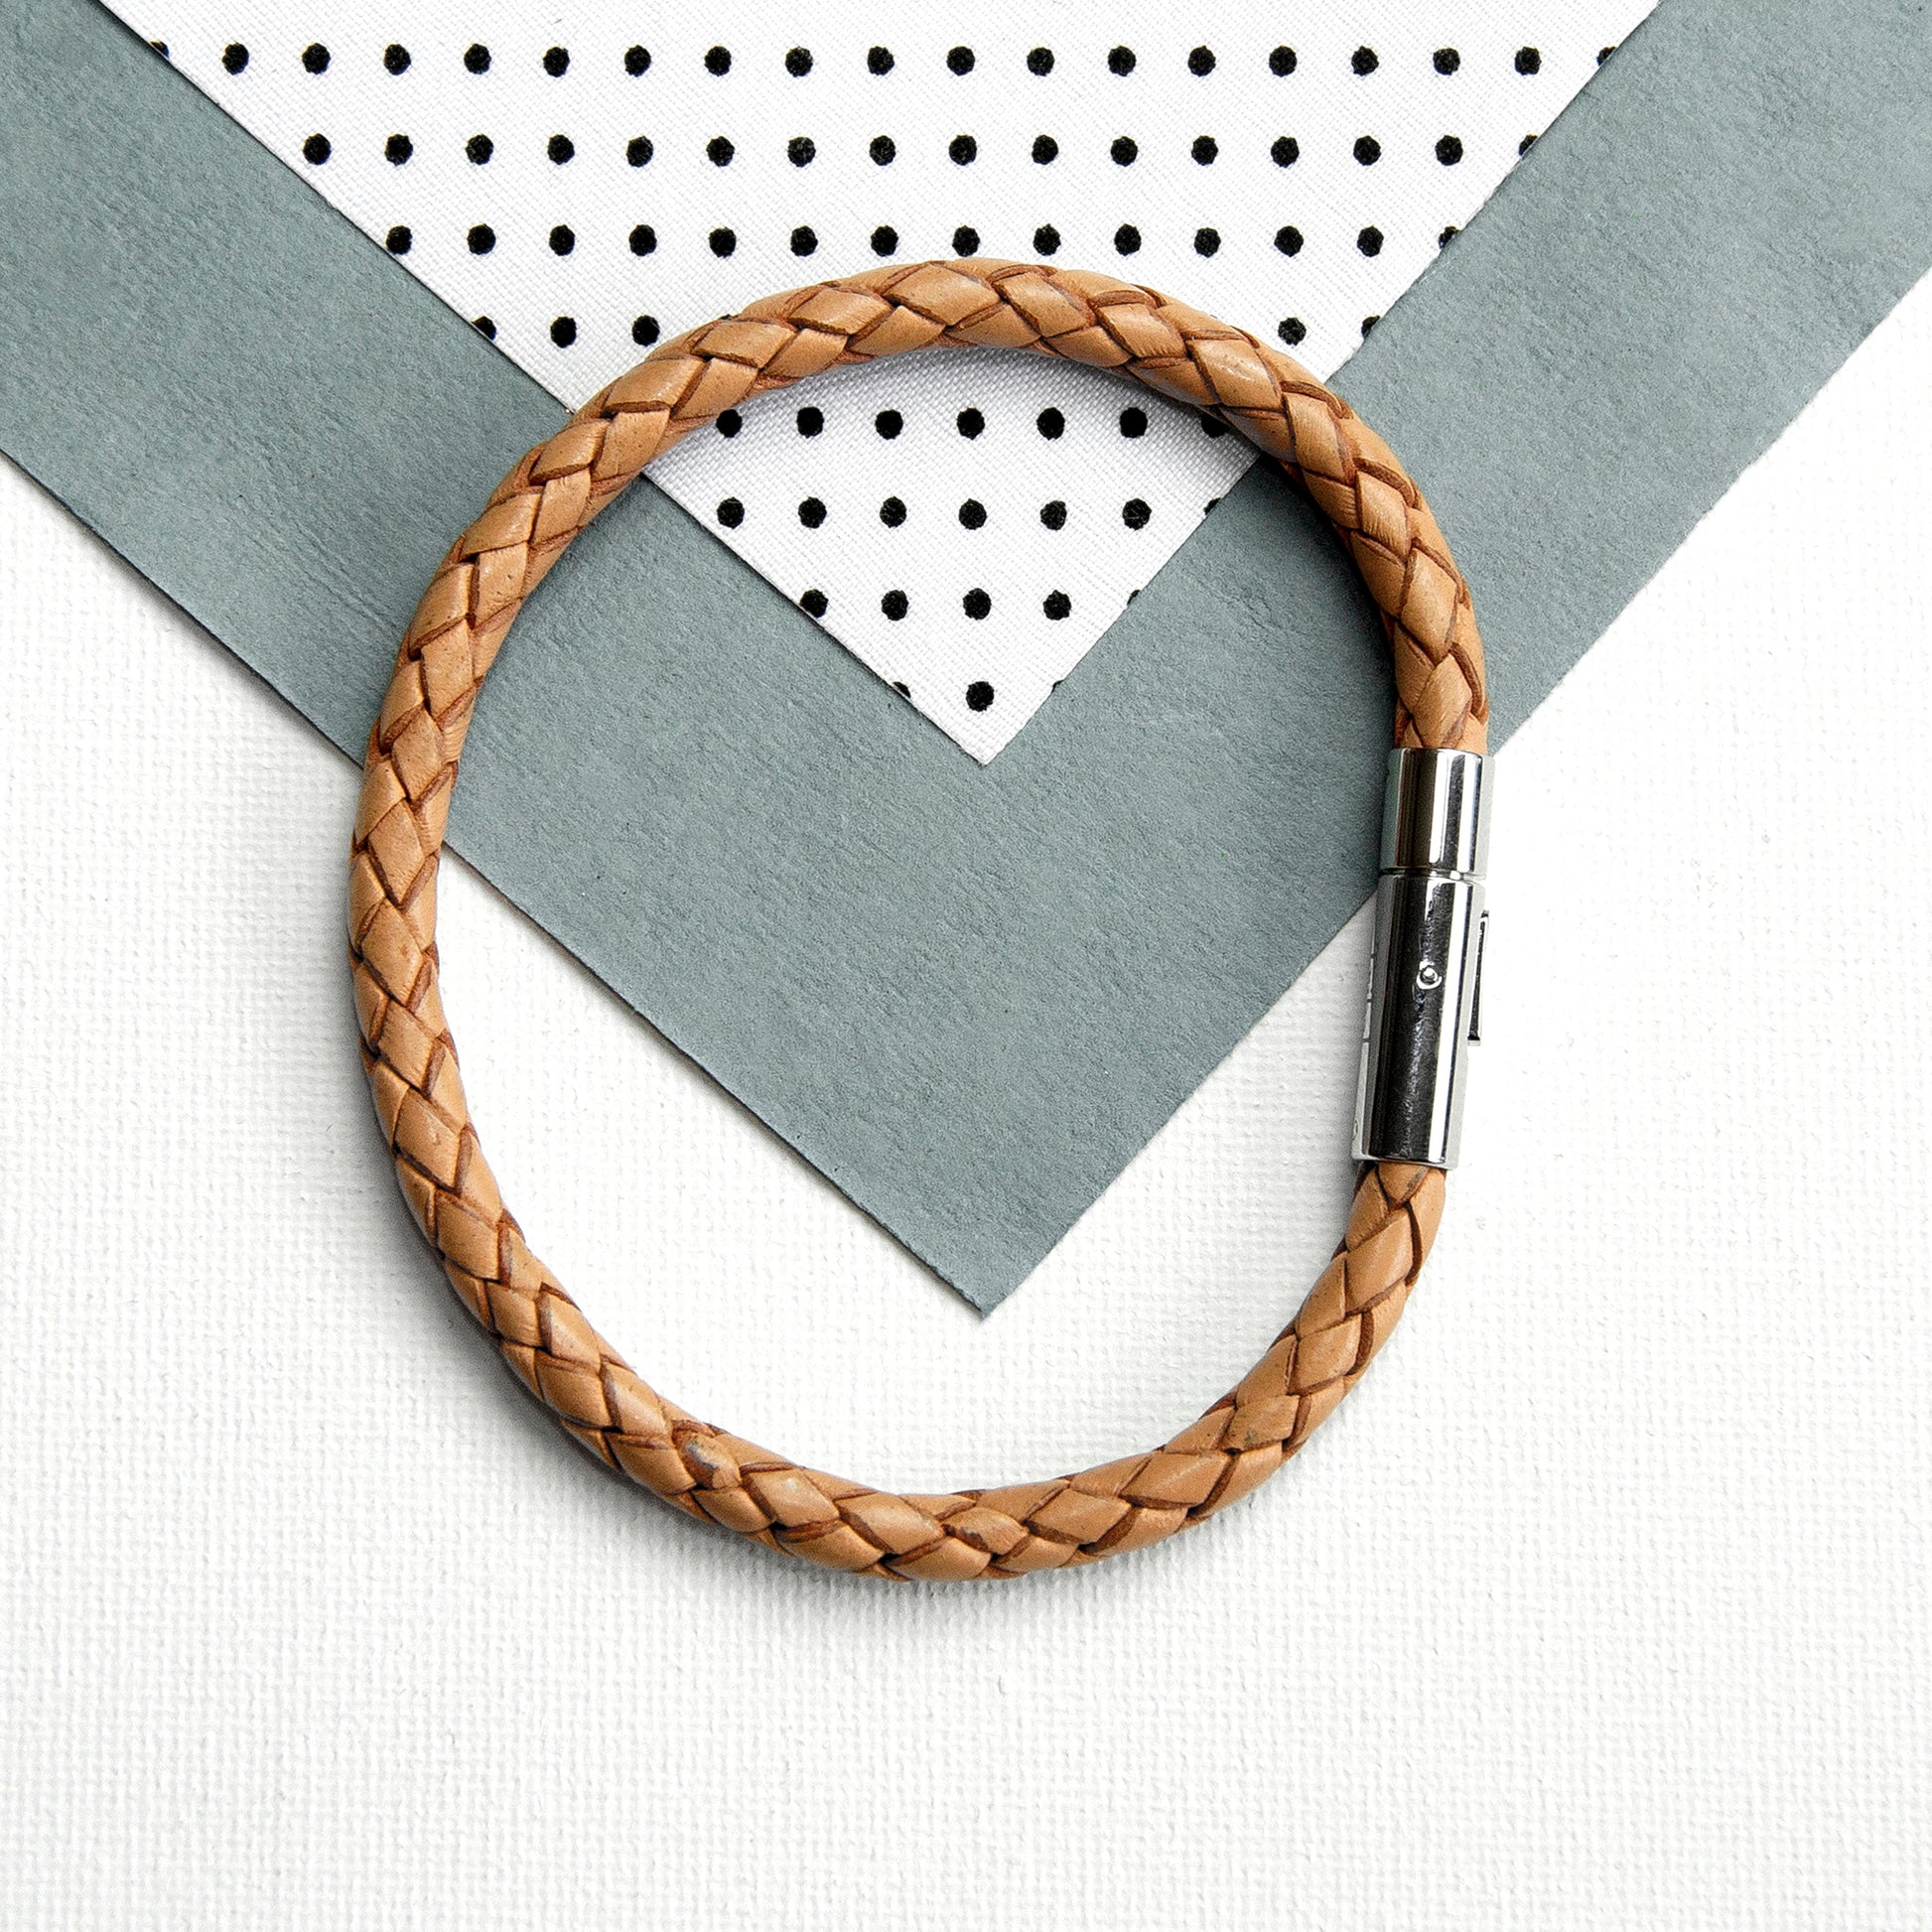 Personalized Men's Bracelets - Personalized Men's Infinity Capsule Leather Bracelet 